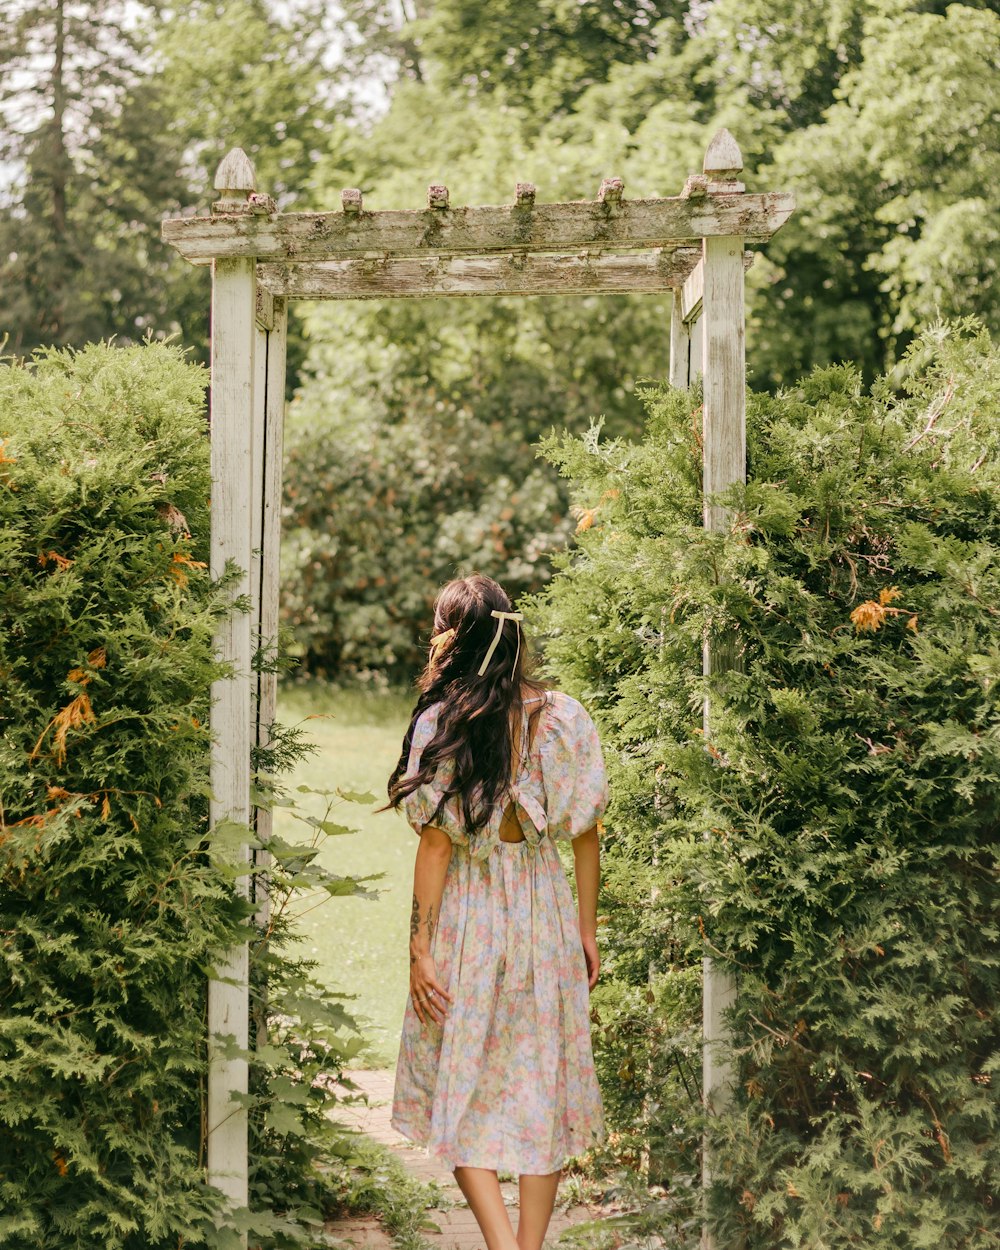 a woman in a dress walking through a garden